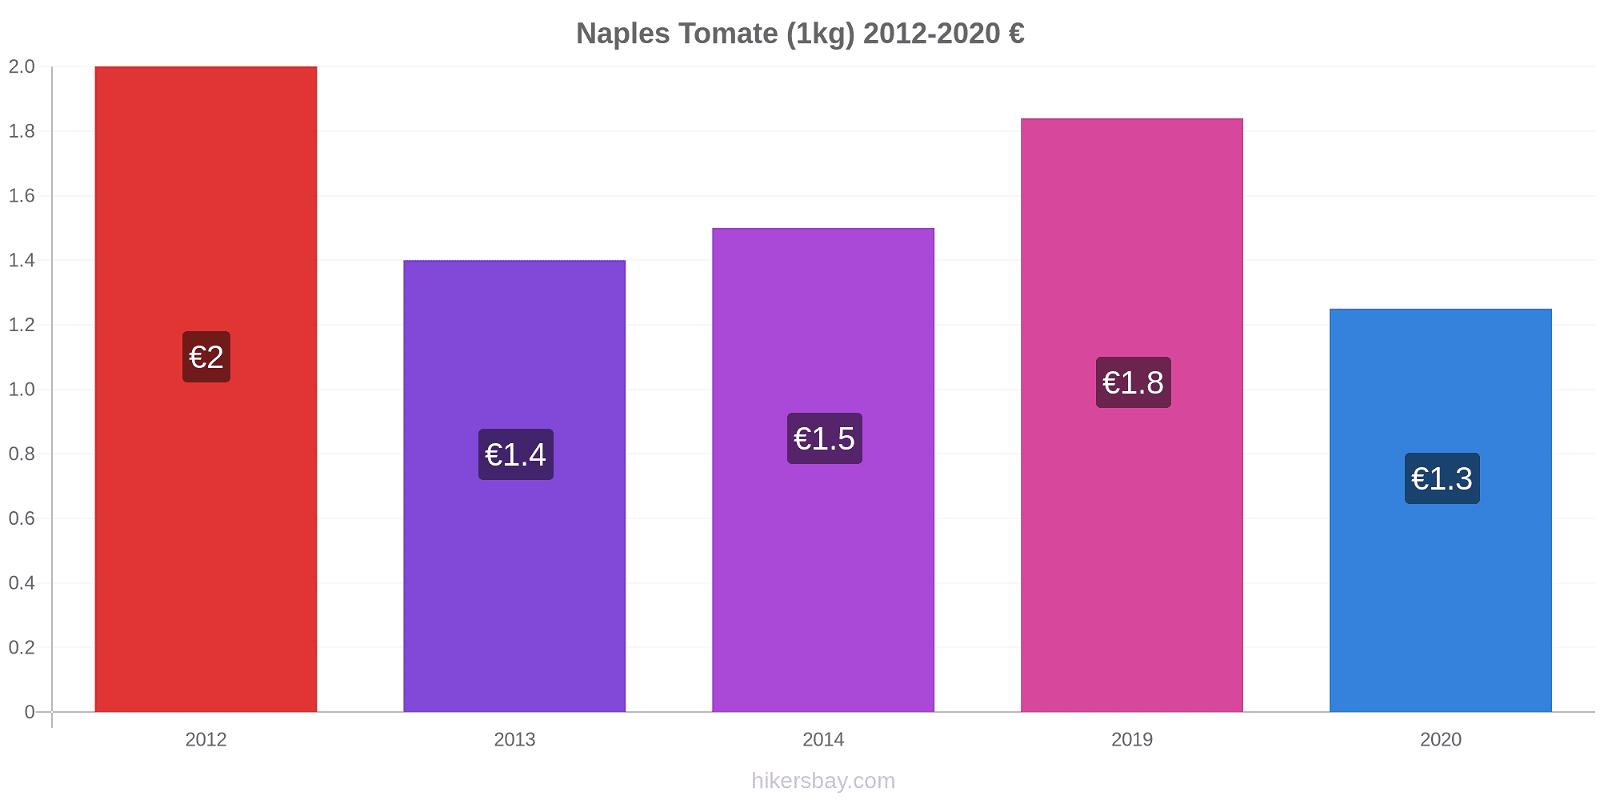 Naples changements de prix Tomate (1kg) hikersbay.com